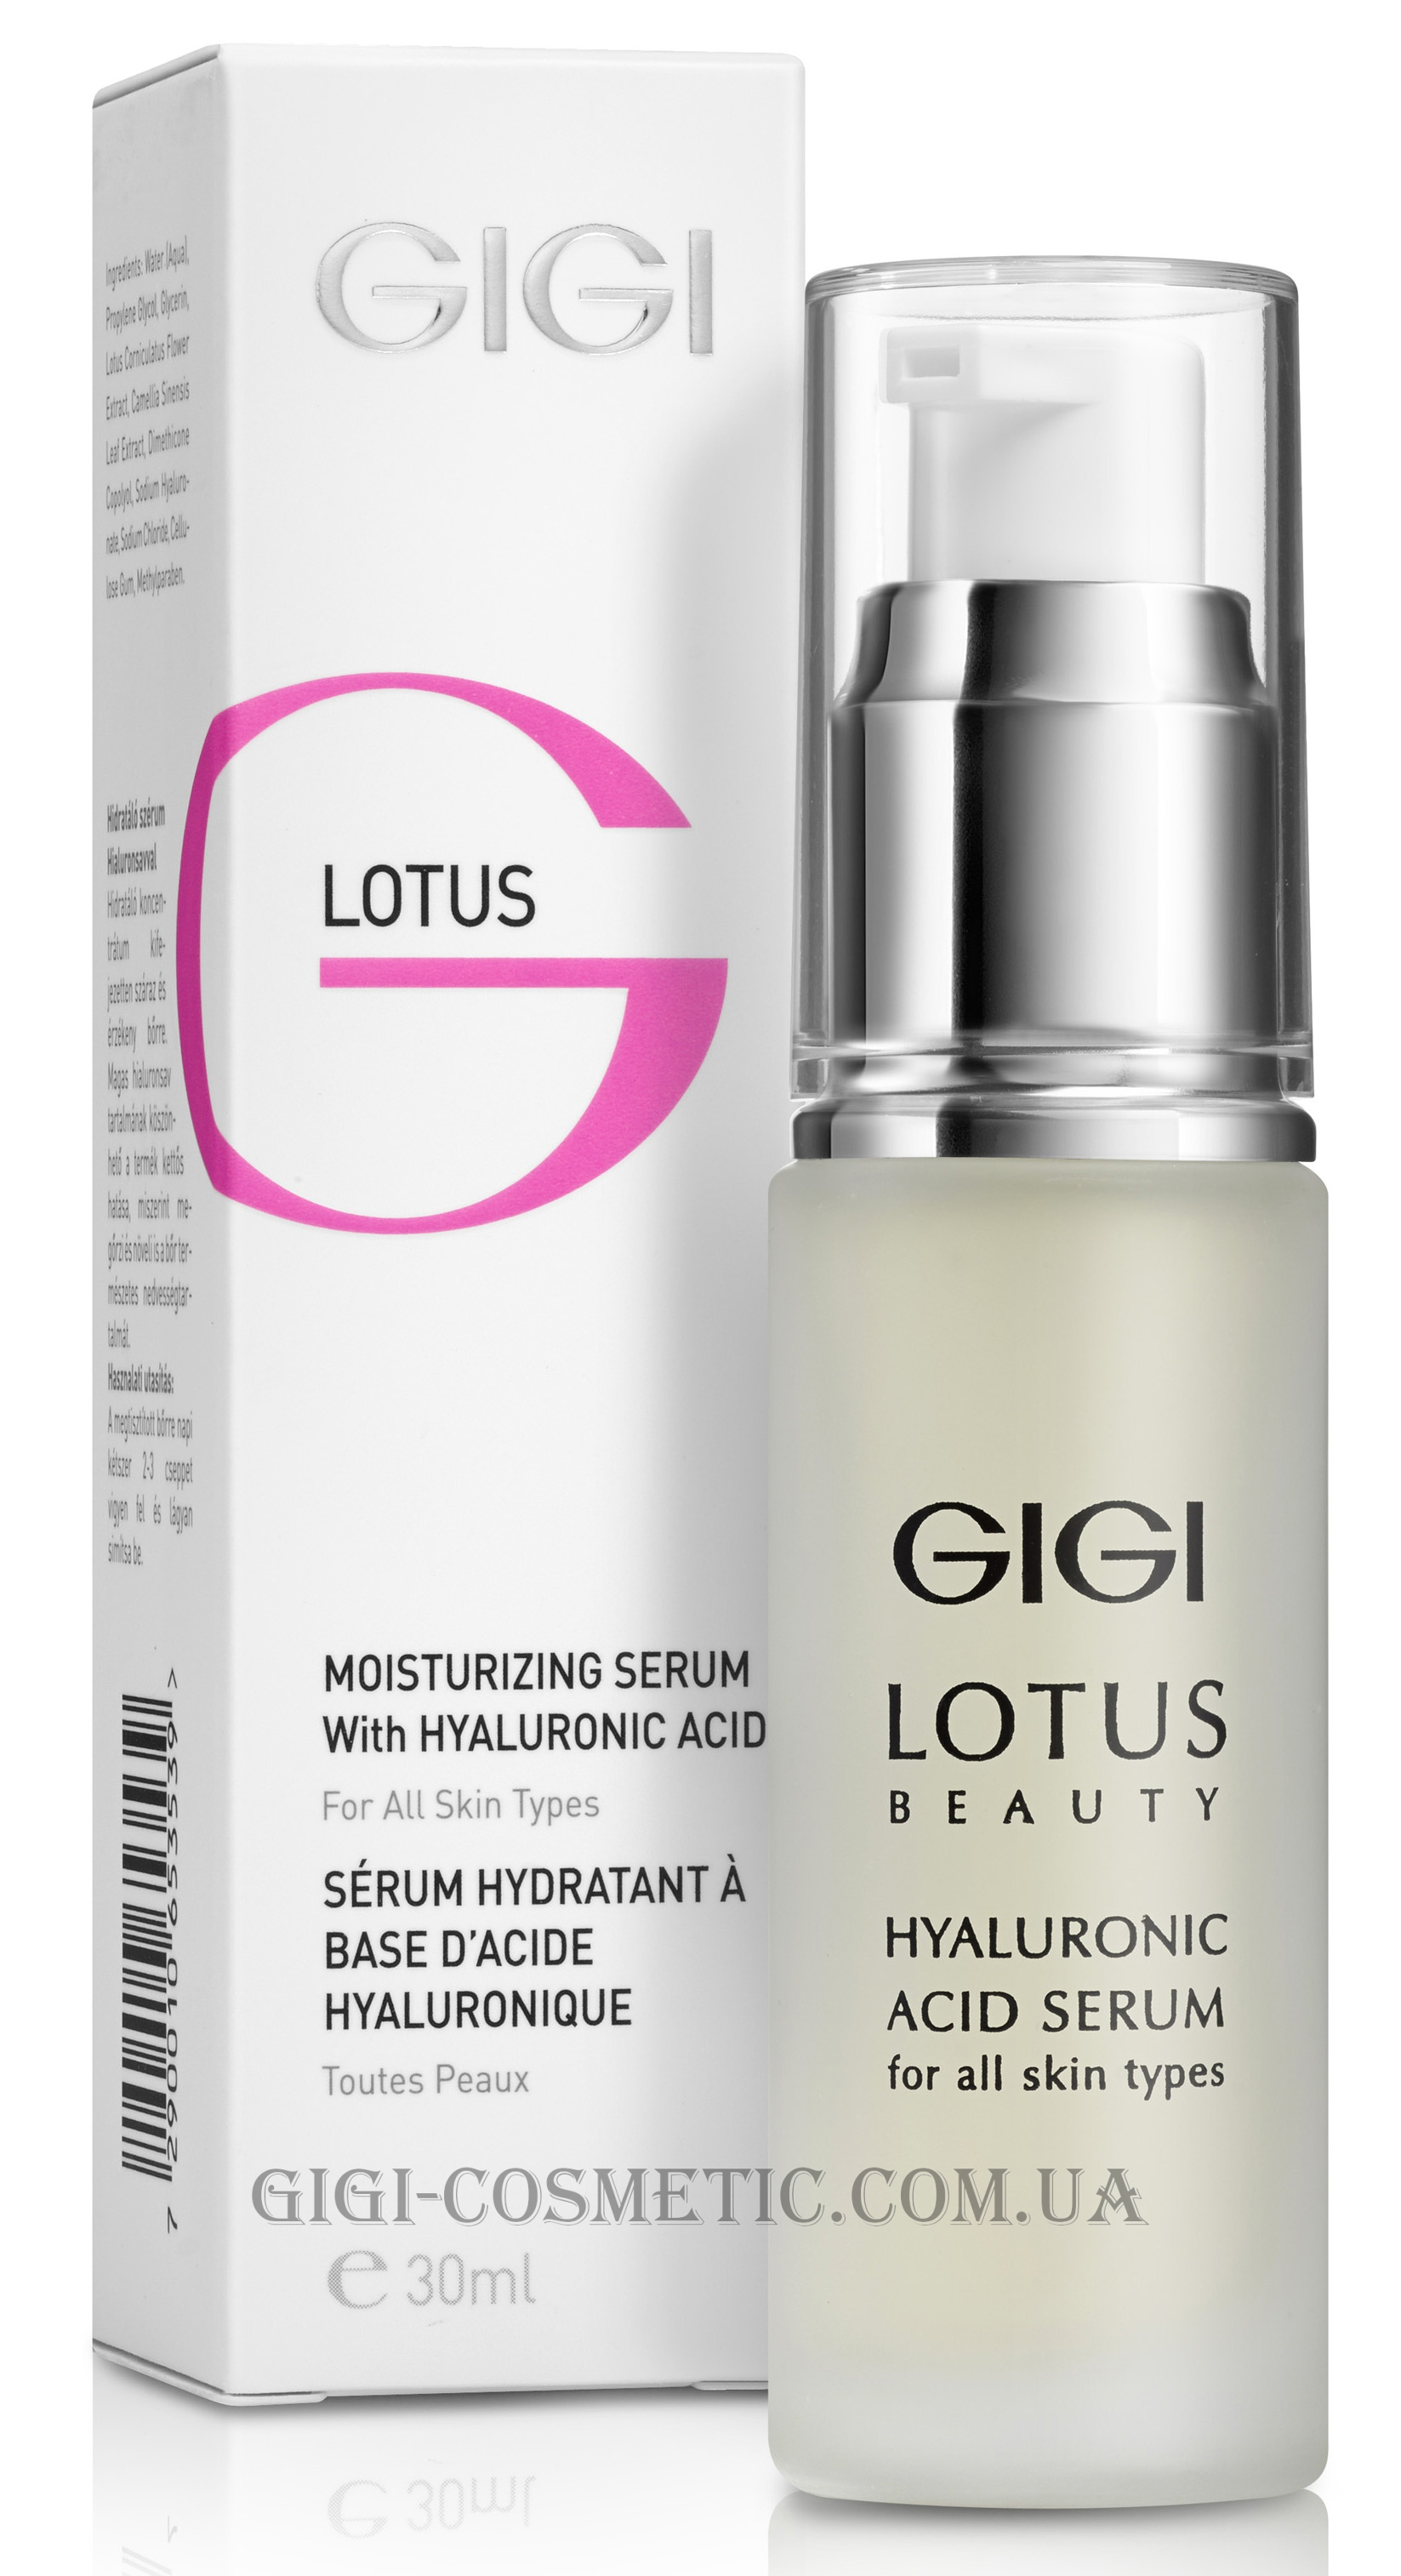 GIGI Lotus Beauty Serum Hyaluronic Acid V - Серум с гиалуроновой кислотой